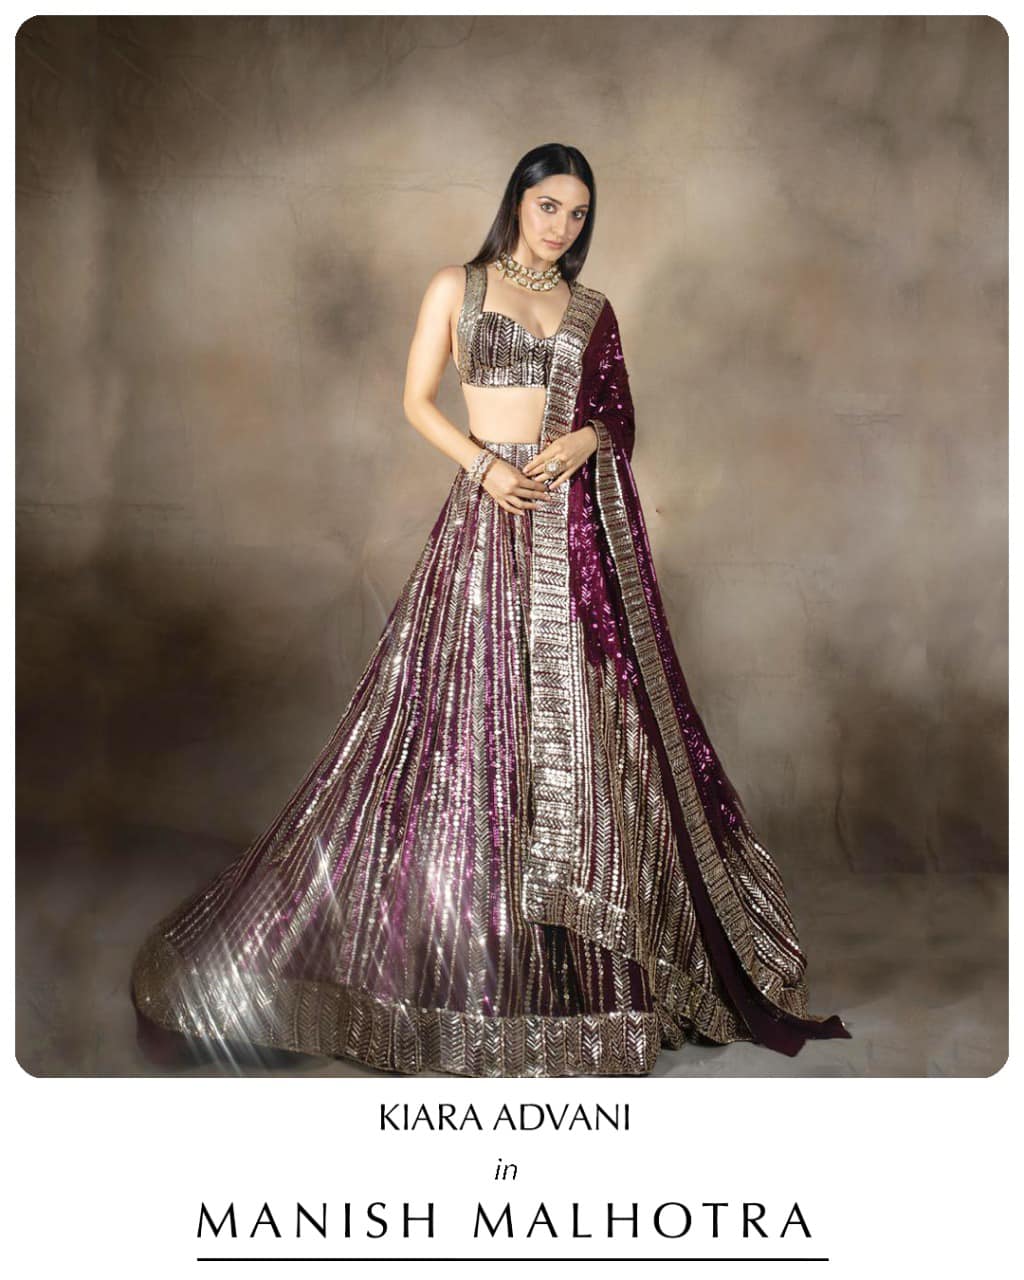 Tara Sutaria Vs Kareena Kapoor Khan Vs Kiara Advani: Who Looks Glamorous In Manish Malhotra Lehenga Collection? 3